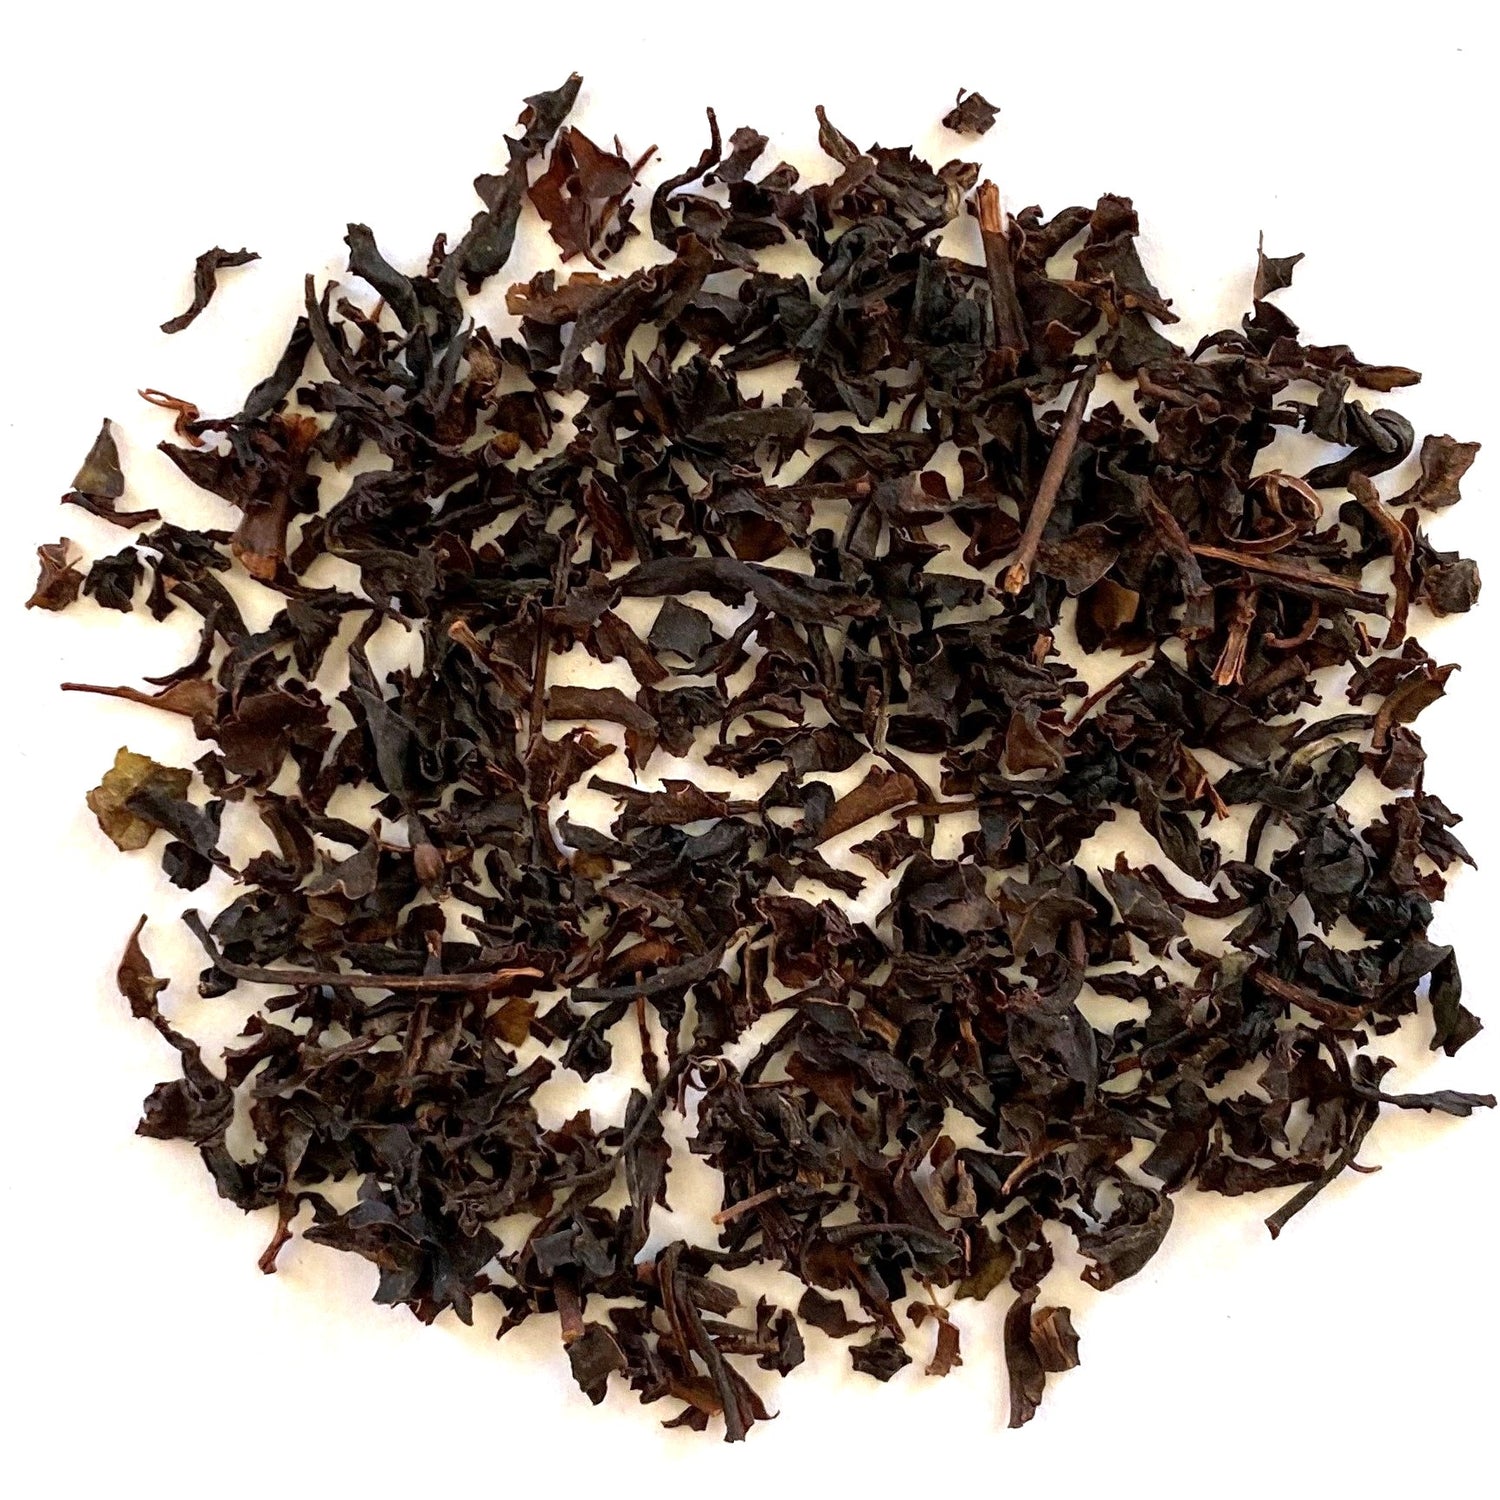 Organic Decaf Black Tea flavored with natural Bergamot